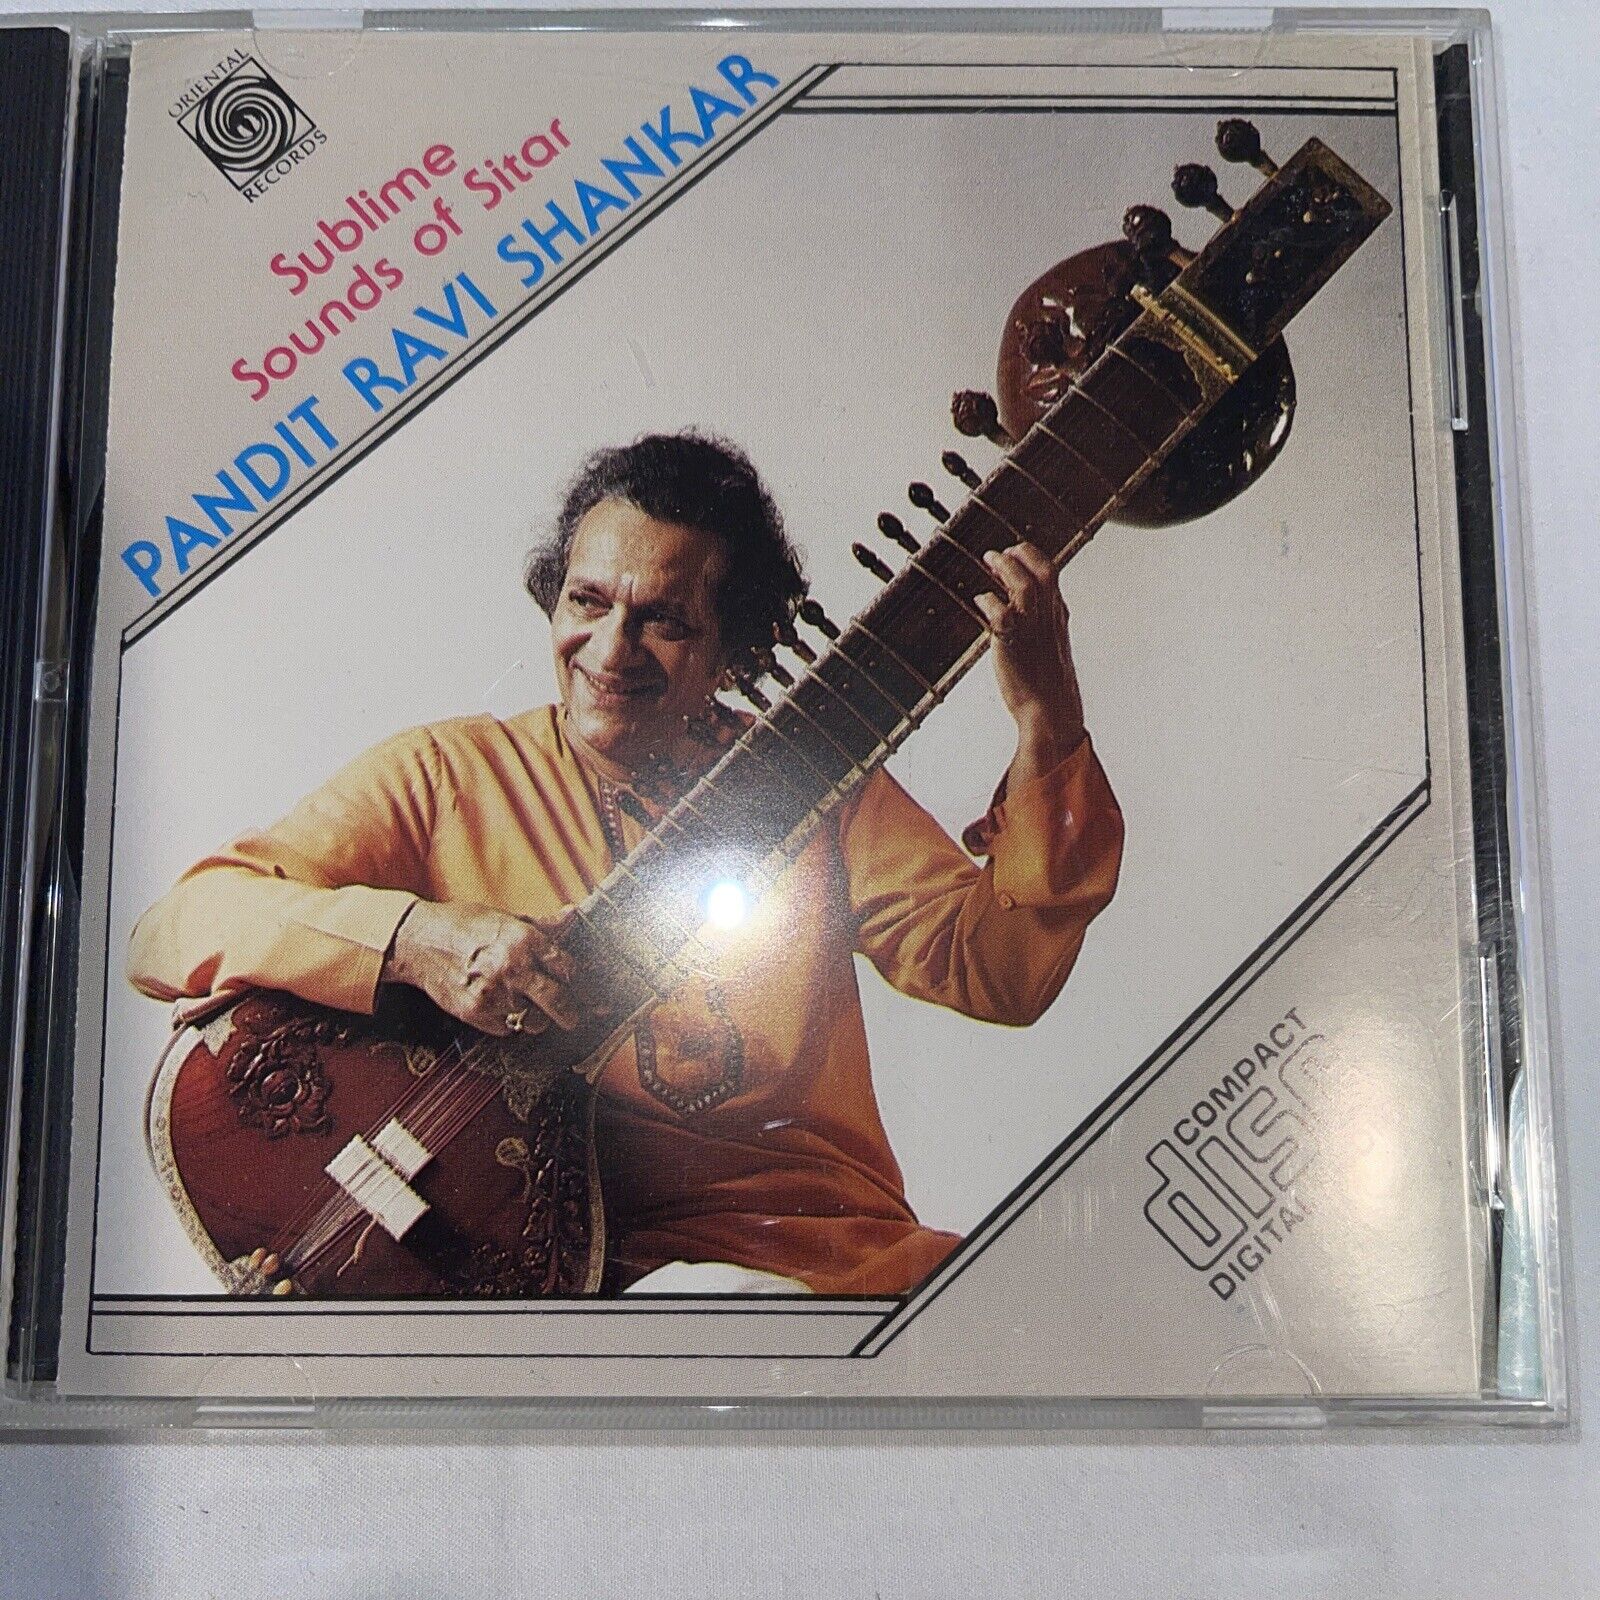 Sublime Sounds of Sitar by Ravi Shankar (CD, Oriental)